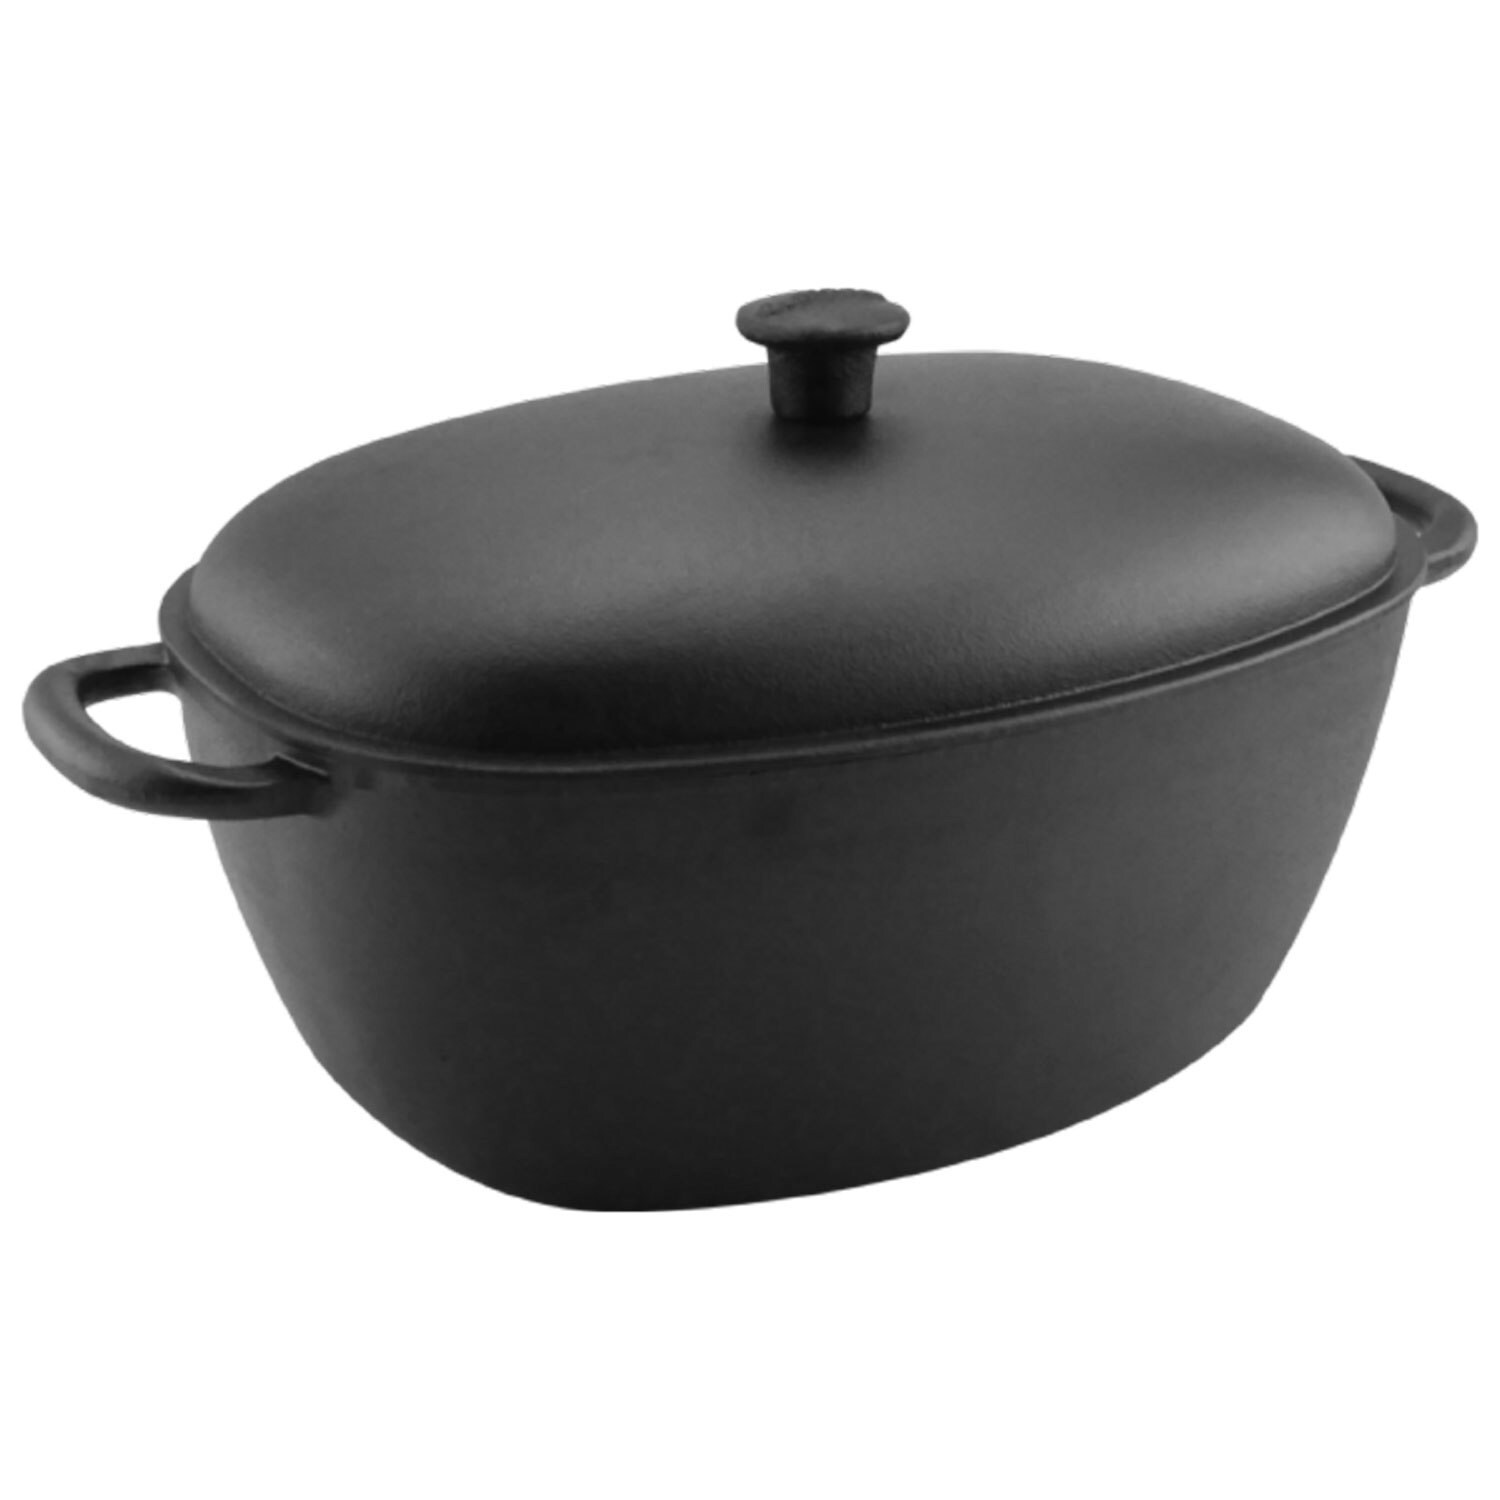 https://royaldesign.com/image/2/carl-victor-oval-cast-iron-pot-with-lid-6-l-0